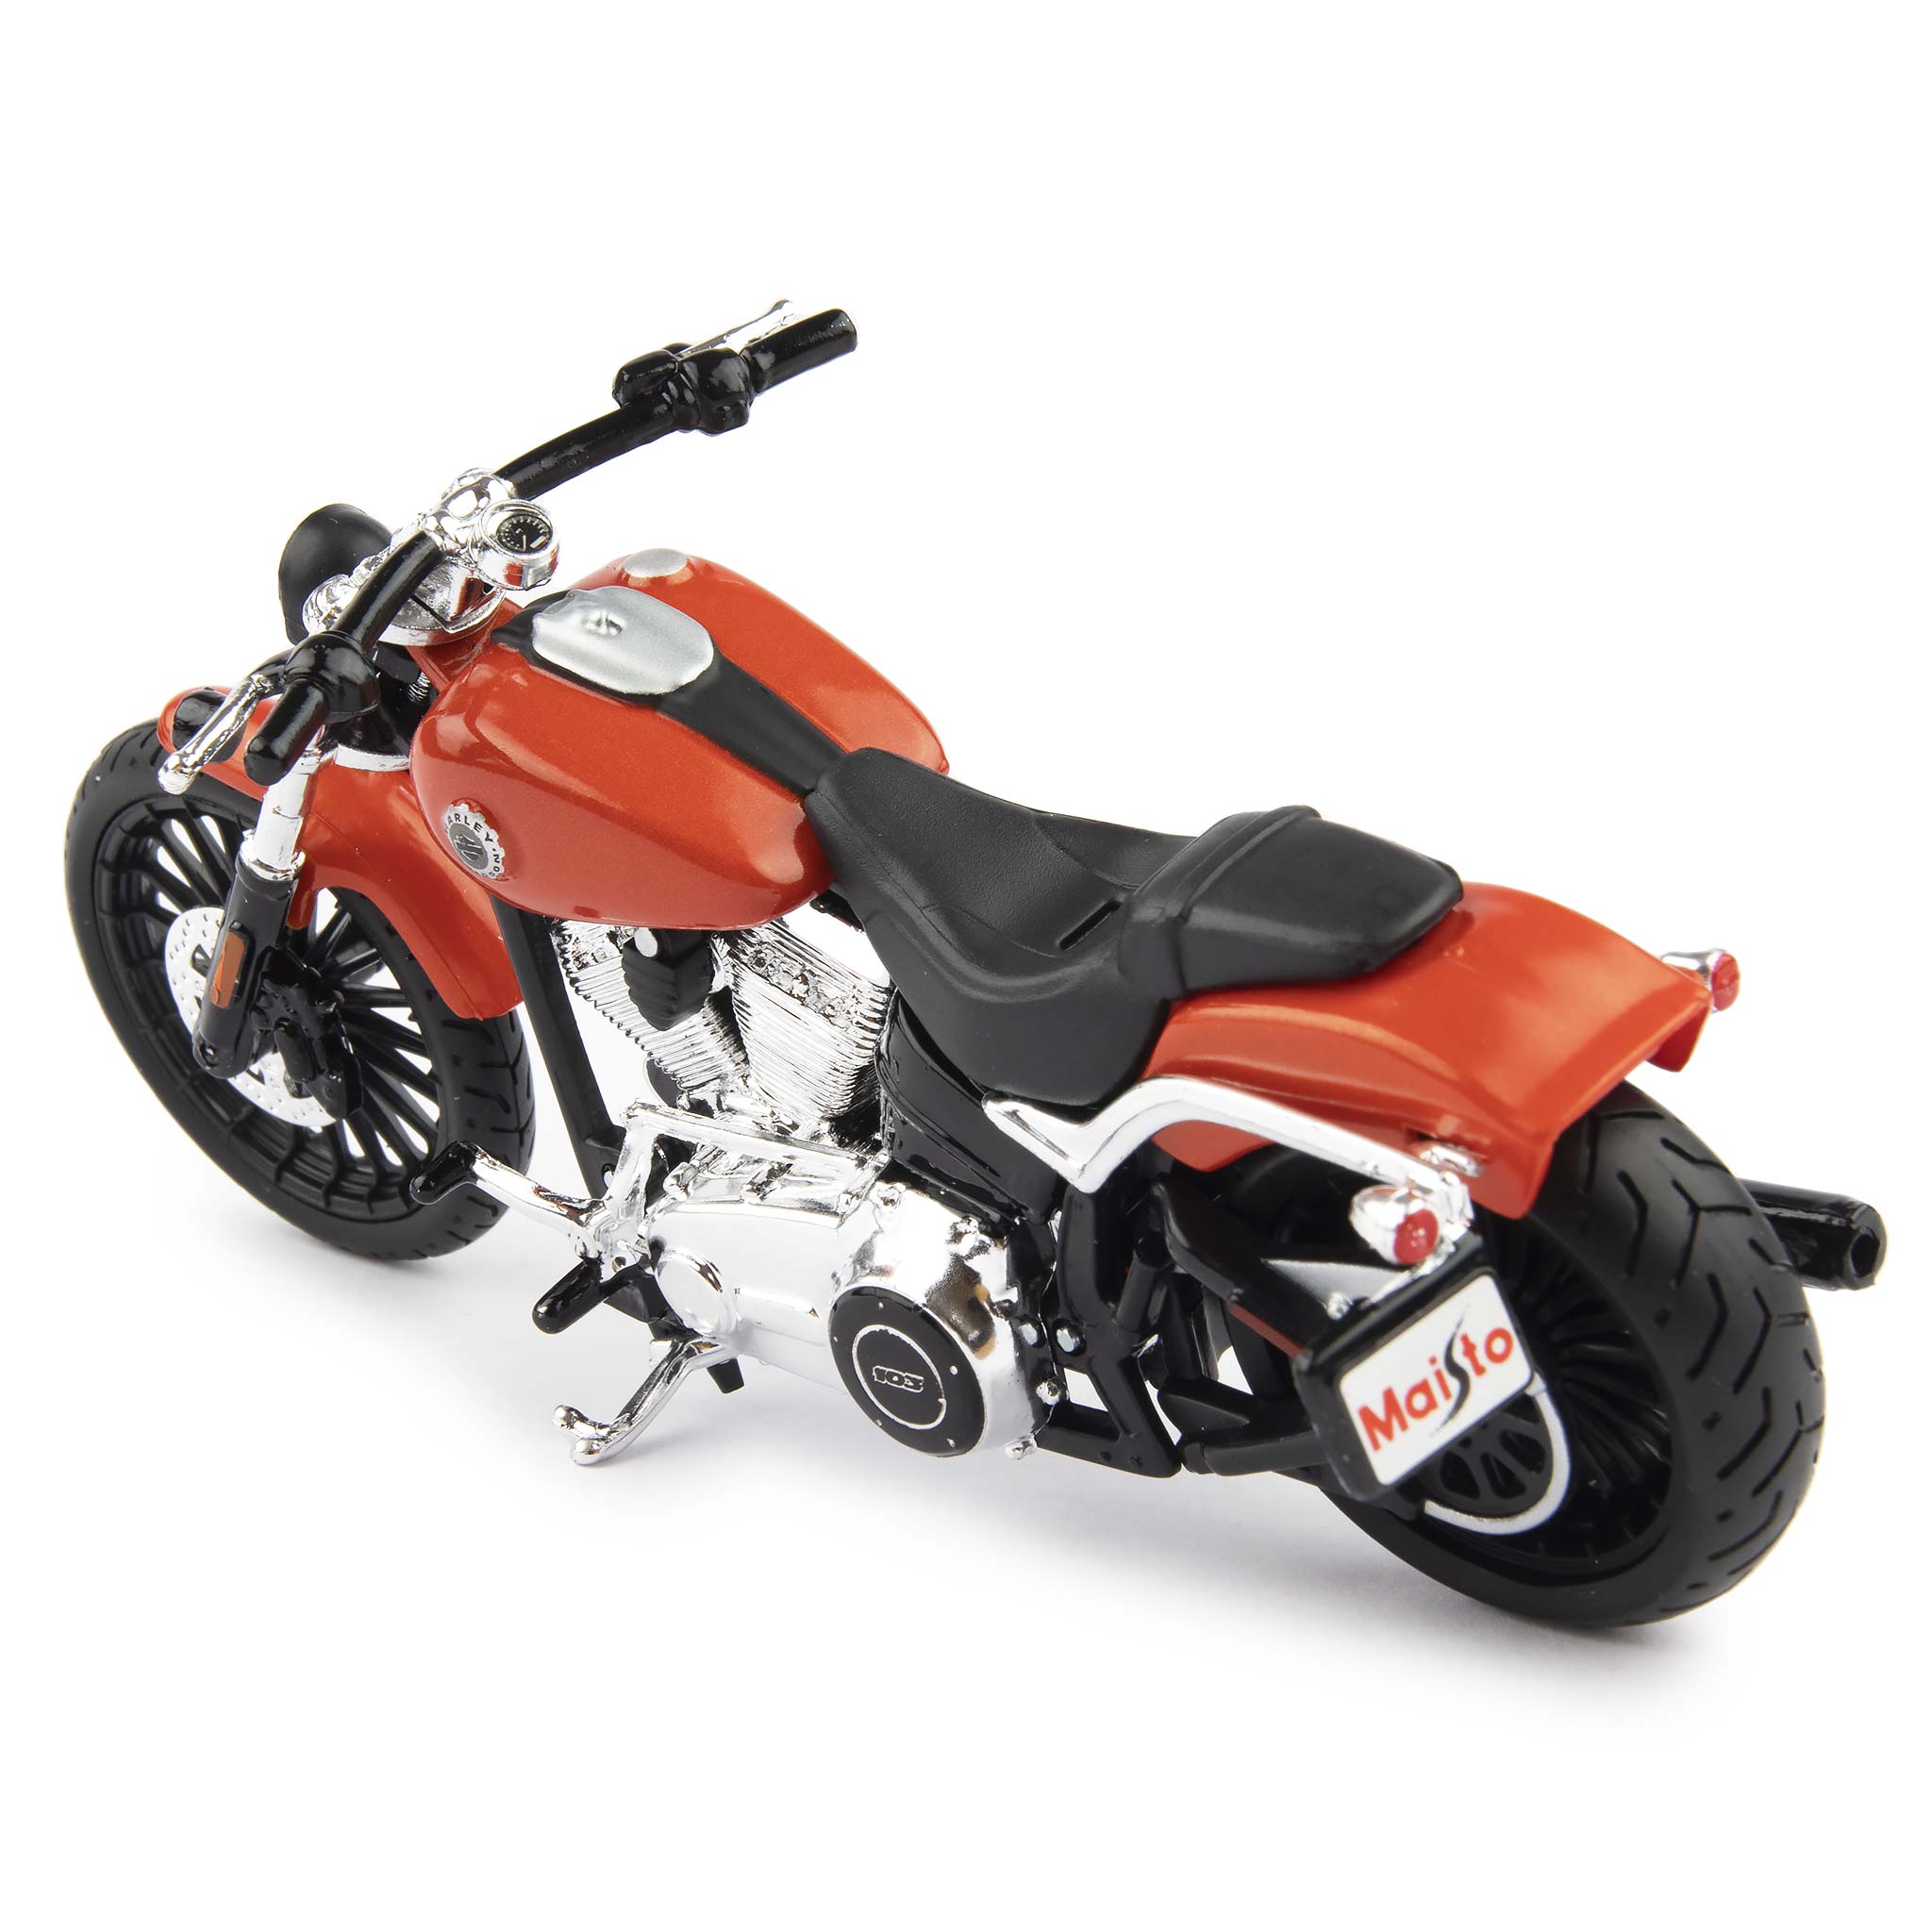 Harley-Davidson Breakout Diecast Model Motorcycle 2016 orange- 1:18 scale-Maisto-Diecast Model Centre